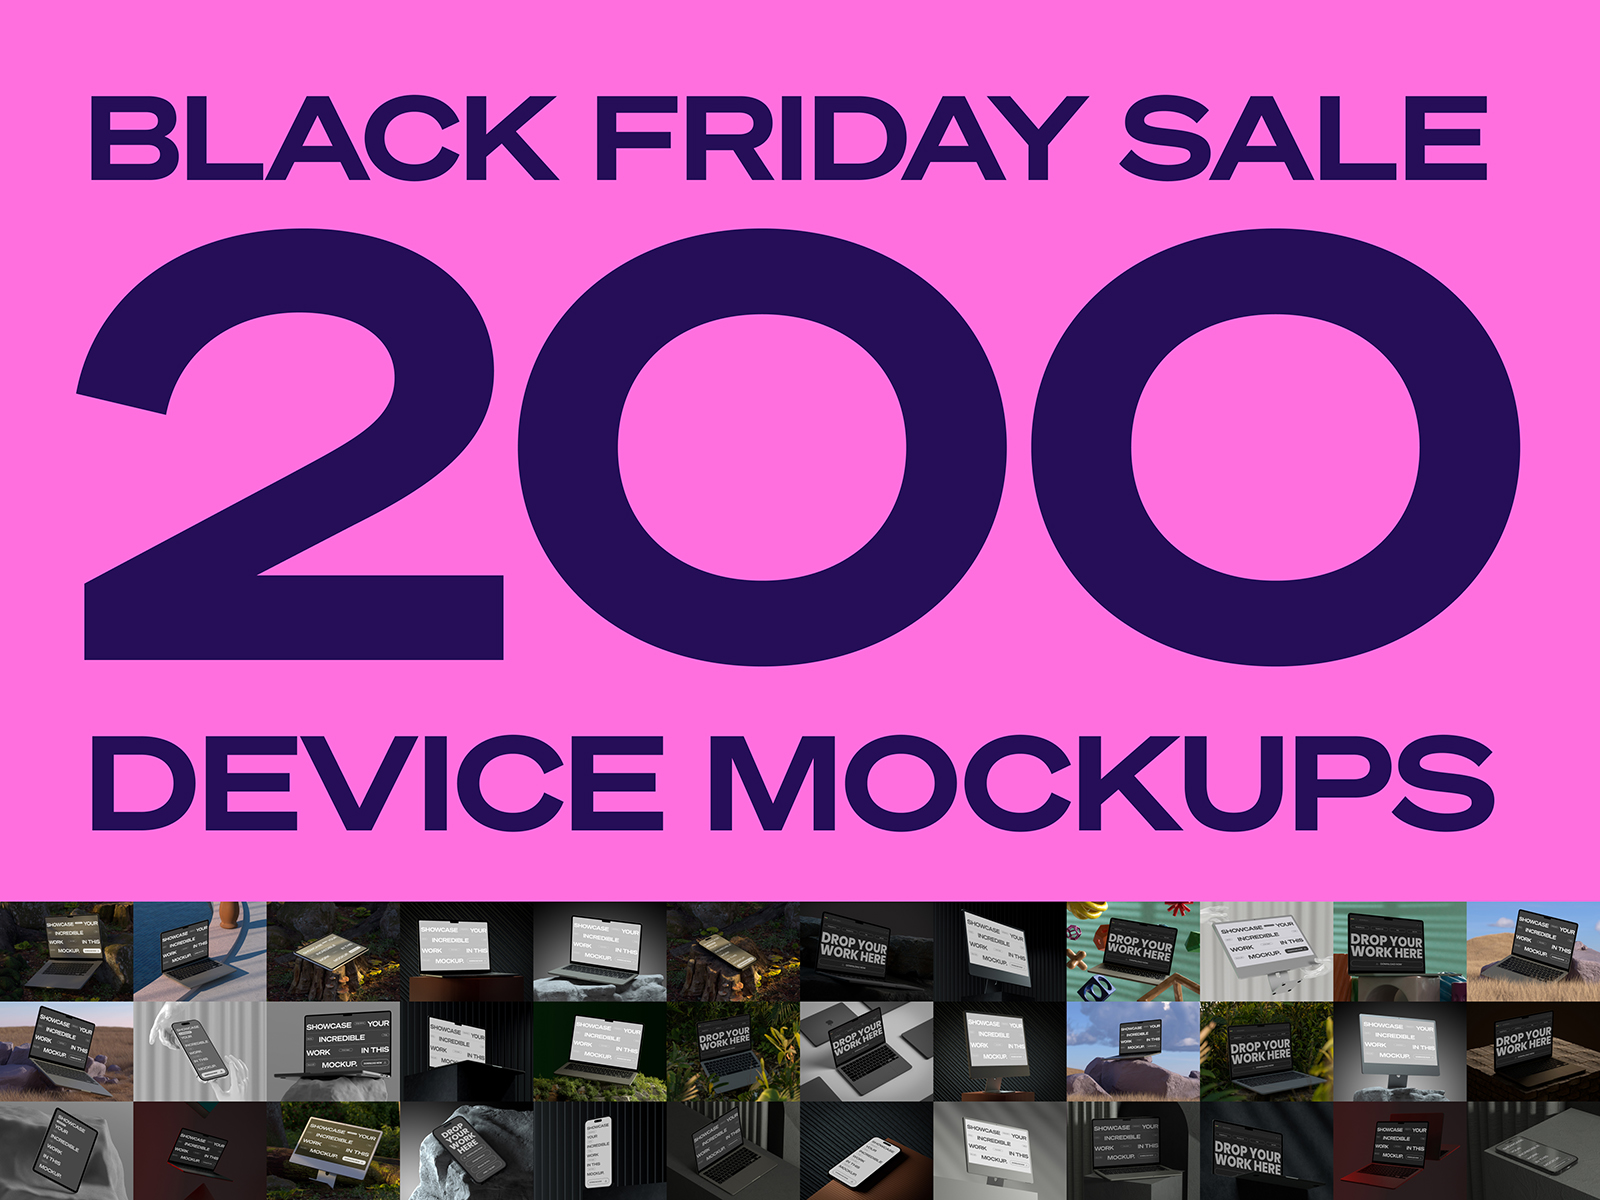 200 Device Mockups - Black Friday Sale